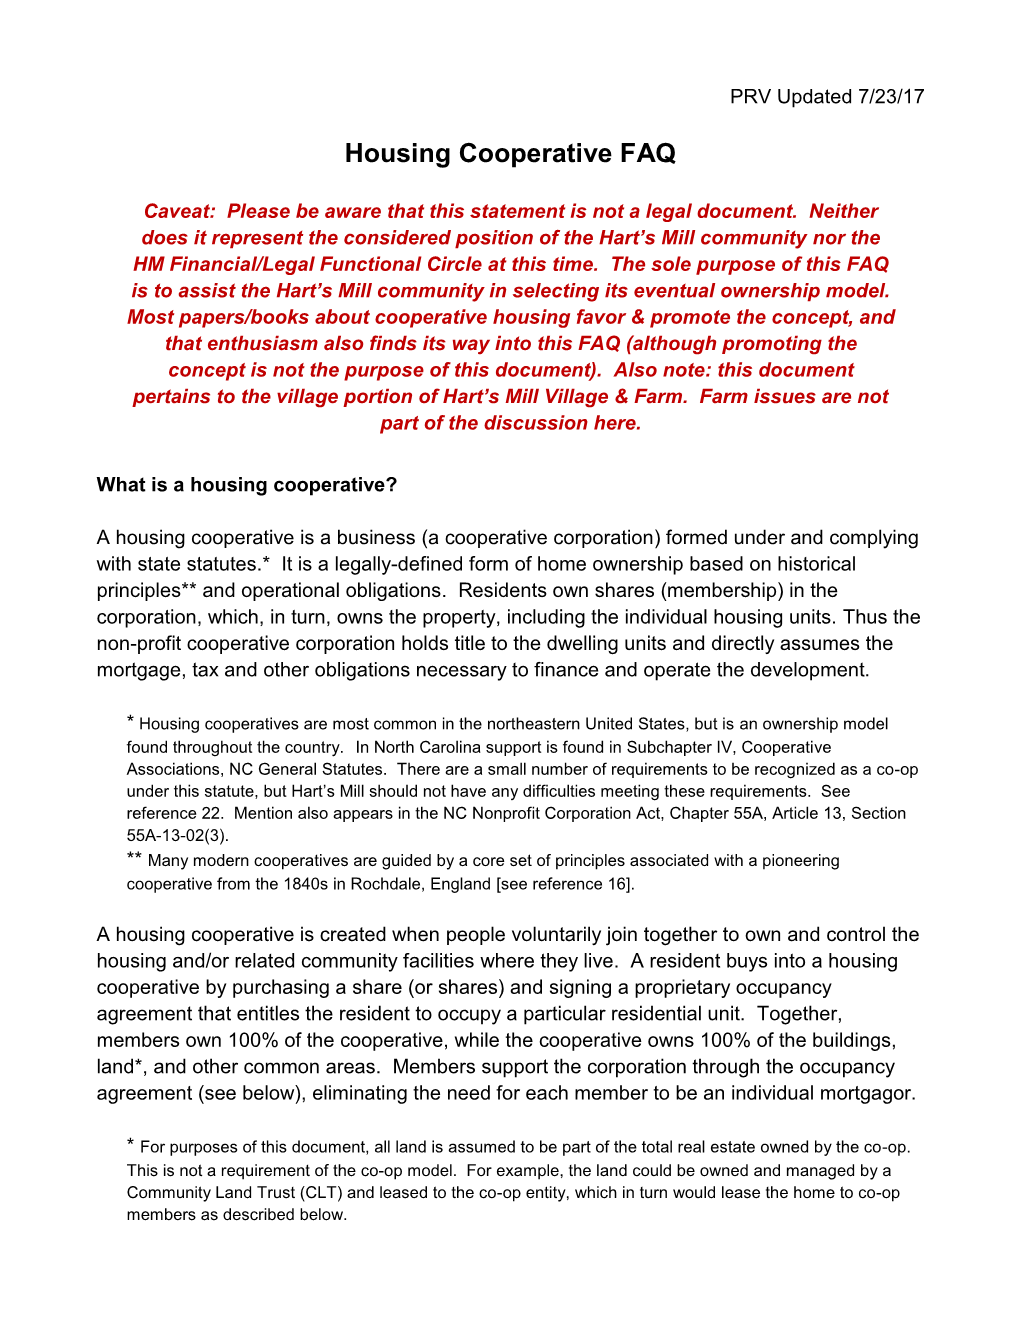 Housing Cooperative FAQ